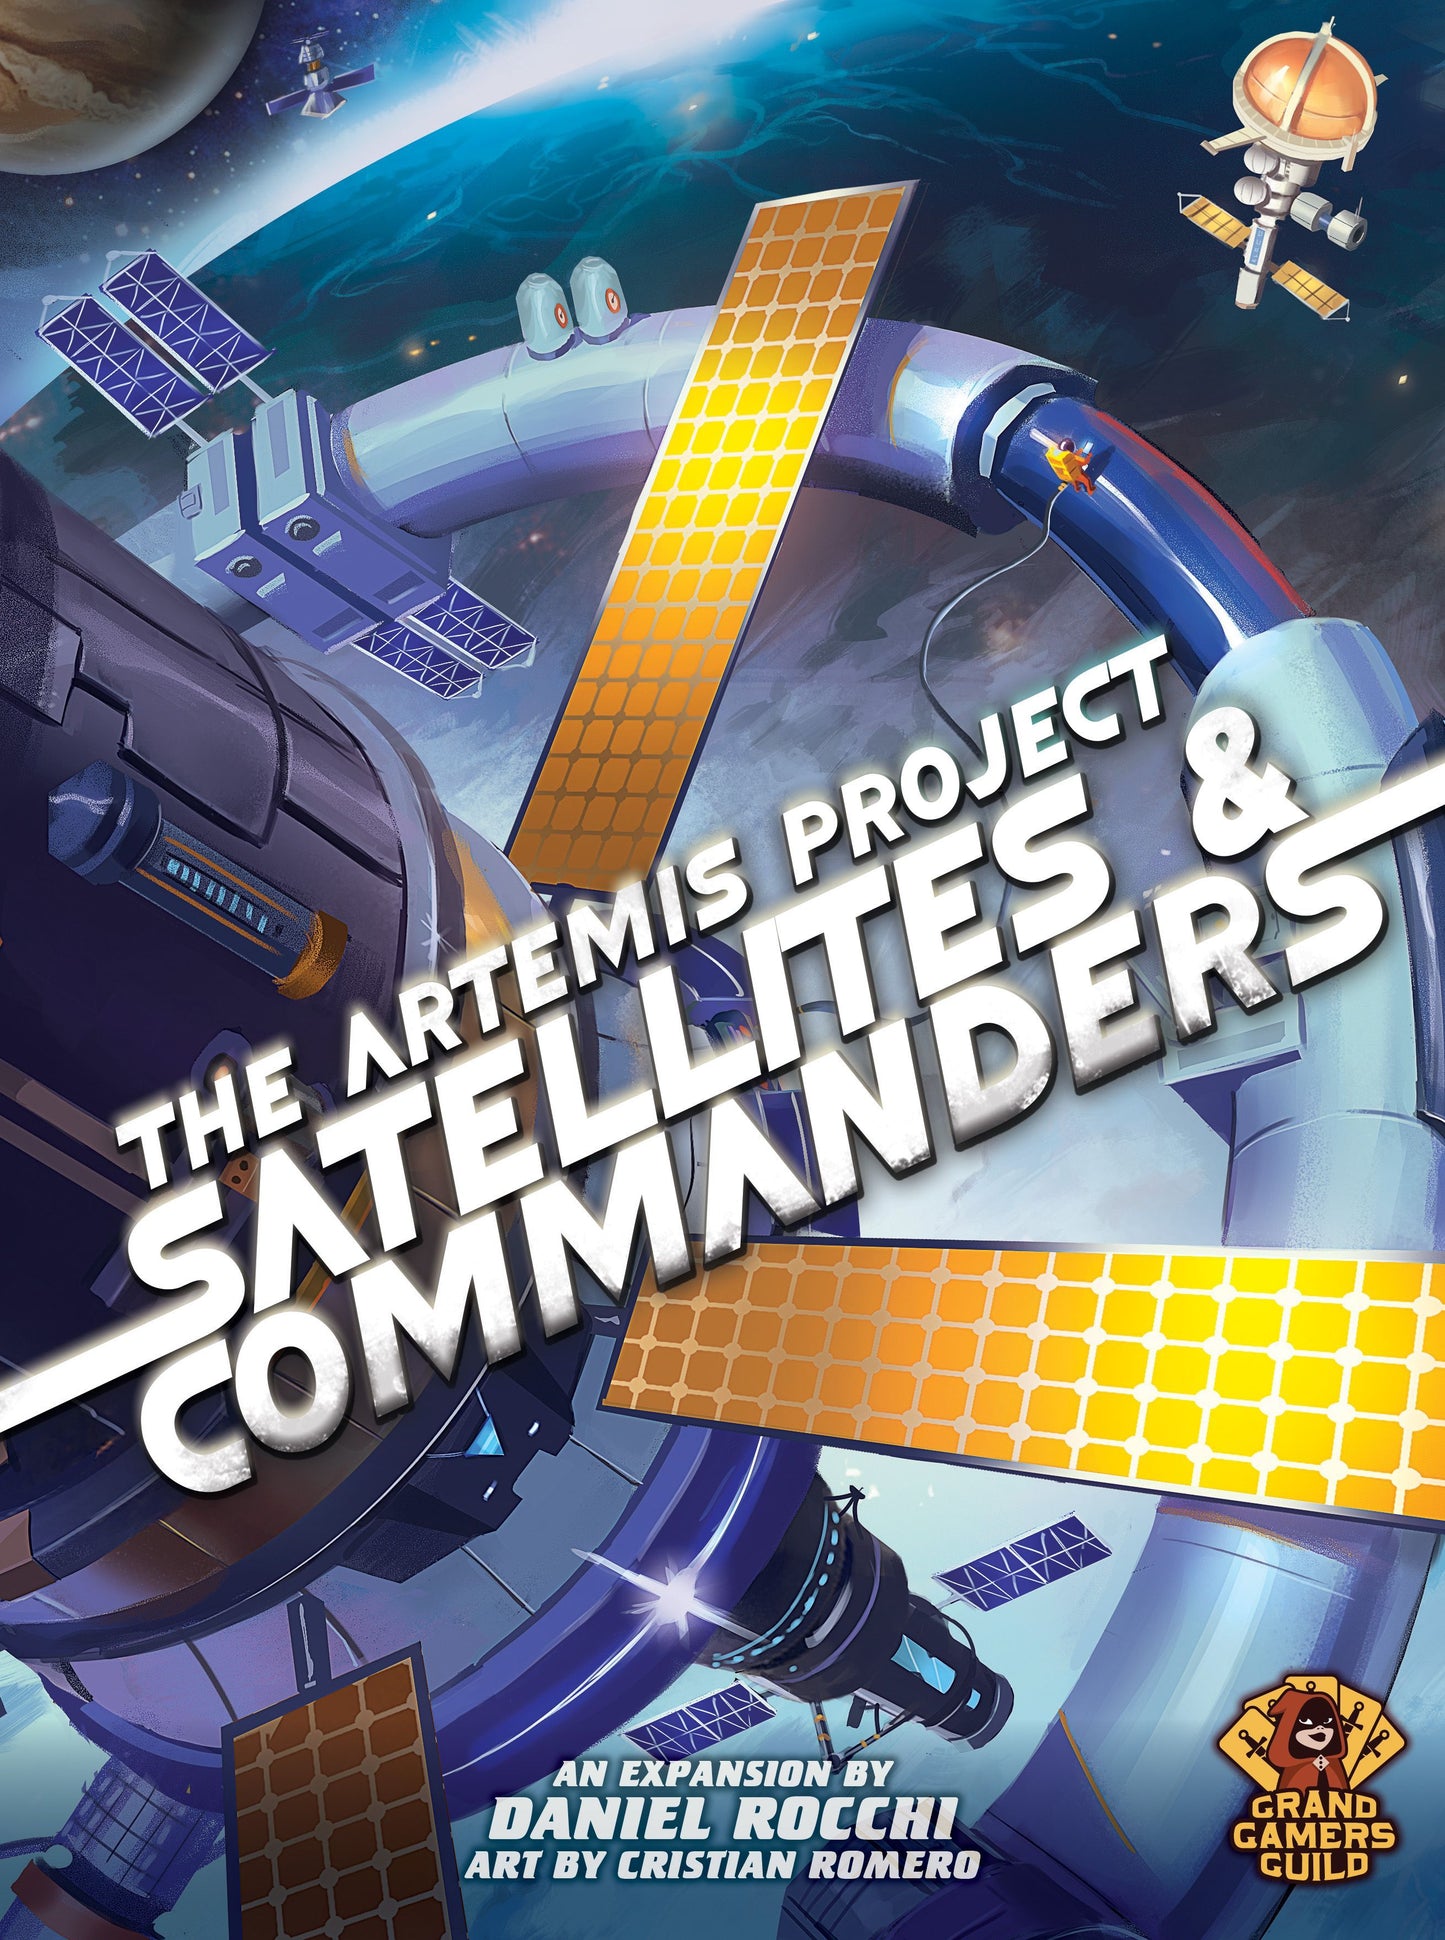 The Artemis Project Satellites & Commanders